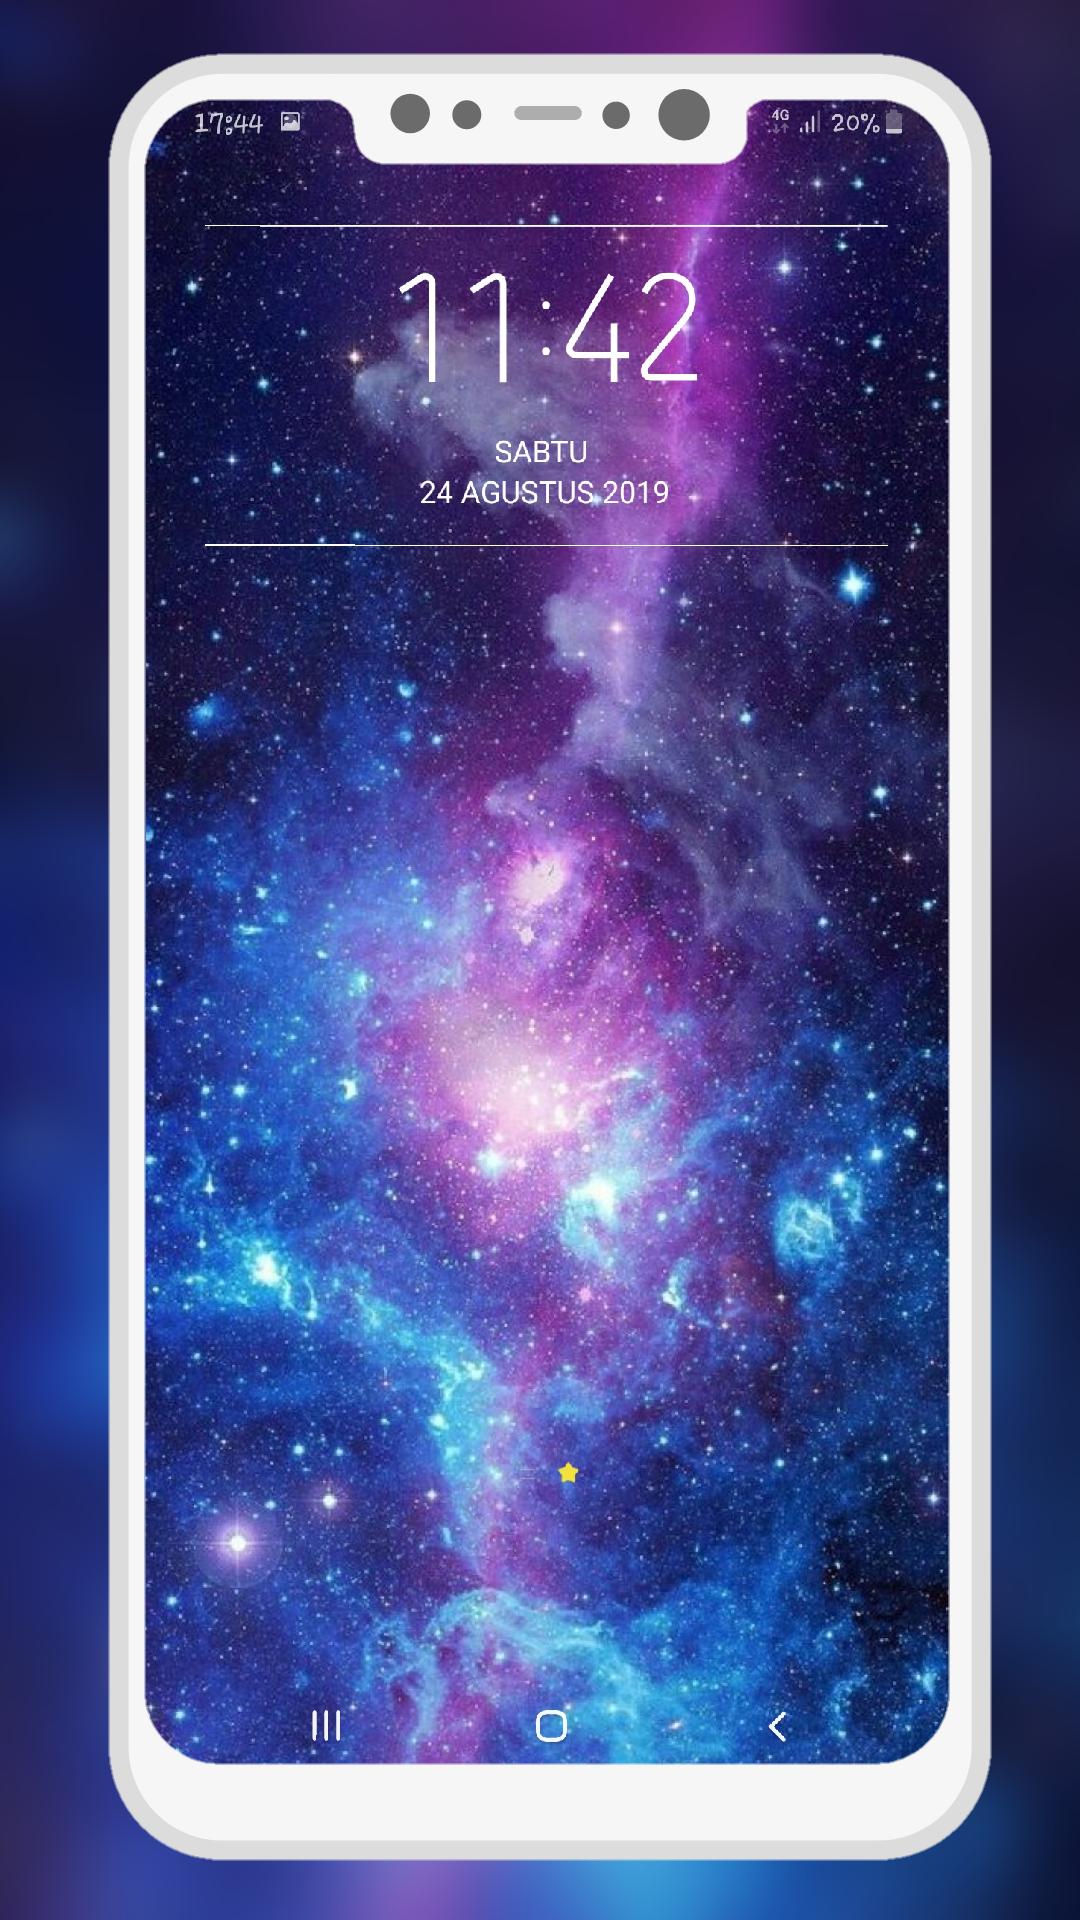 Galaxy Wallpaper Android Kecbio